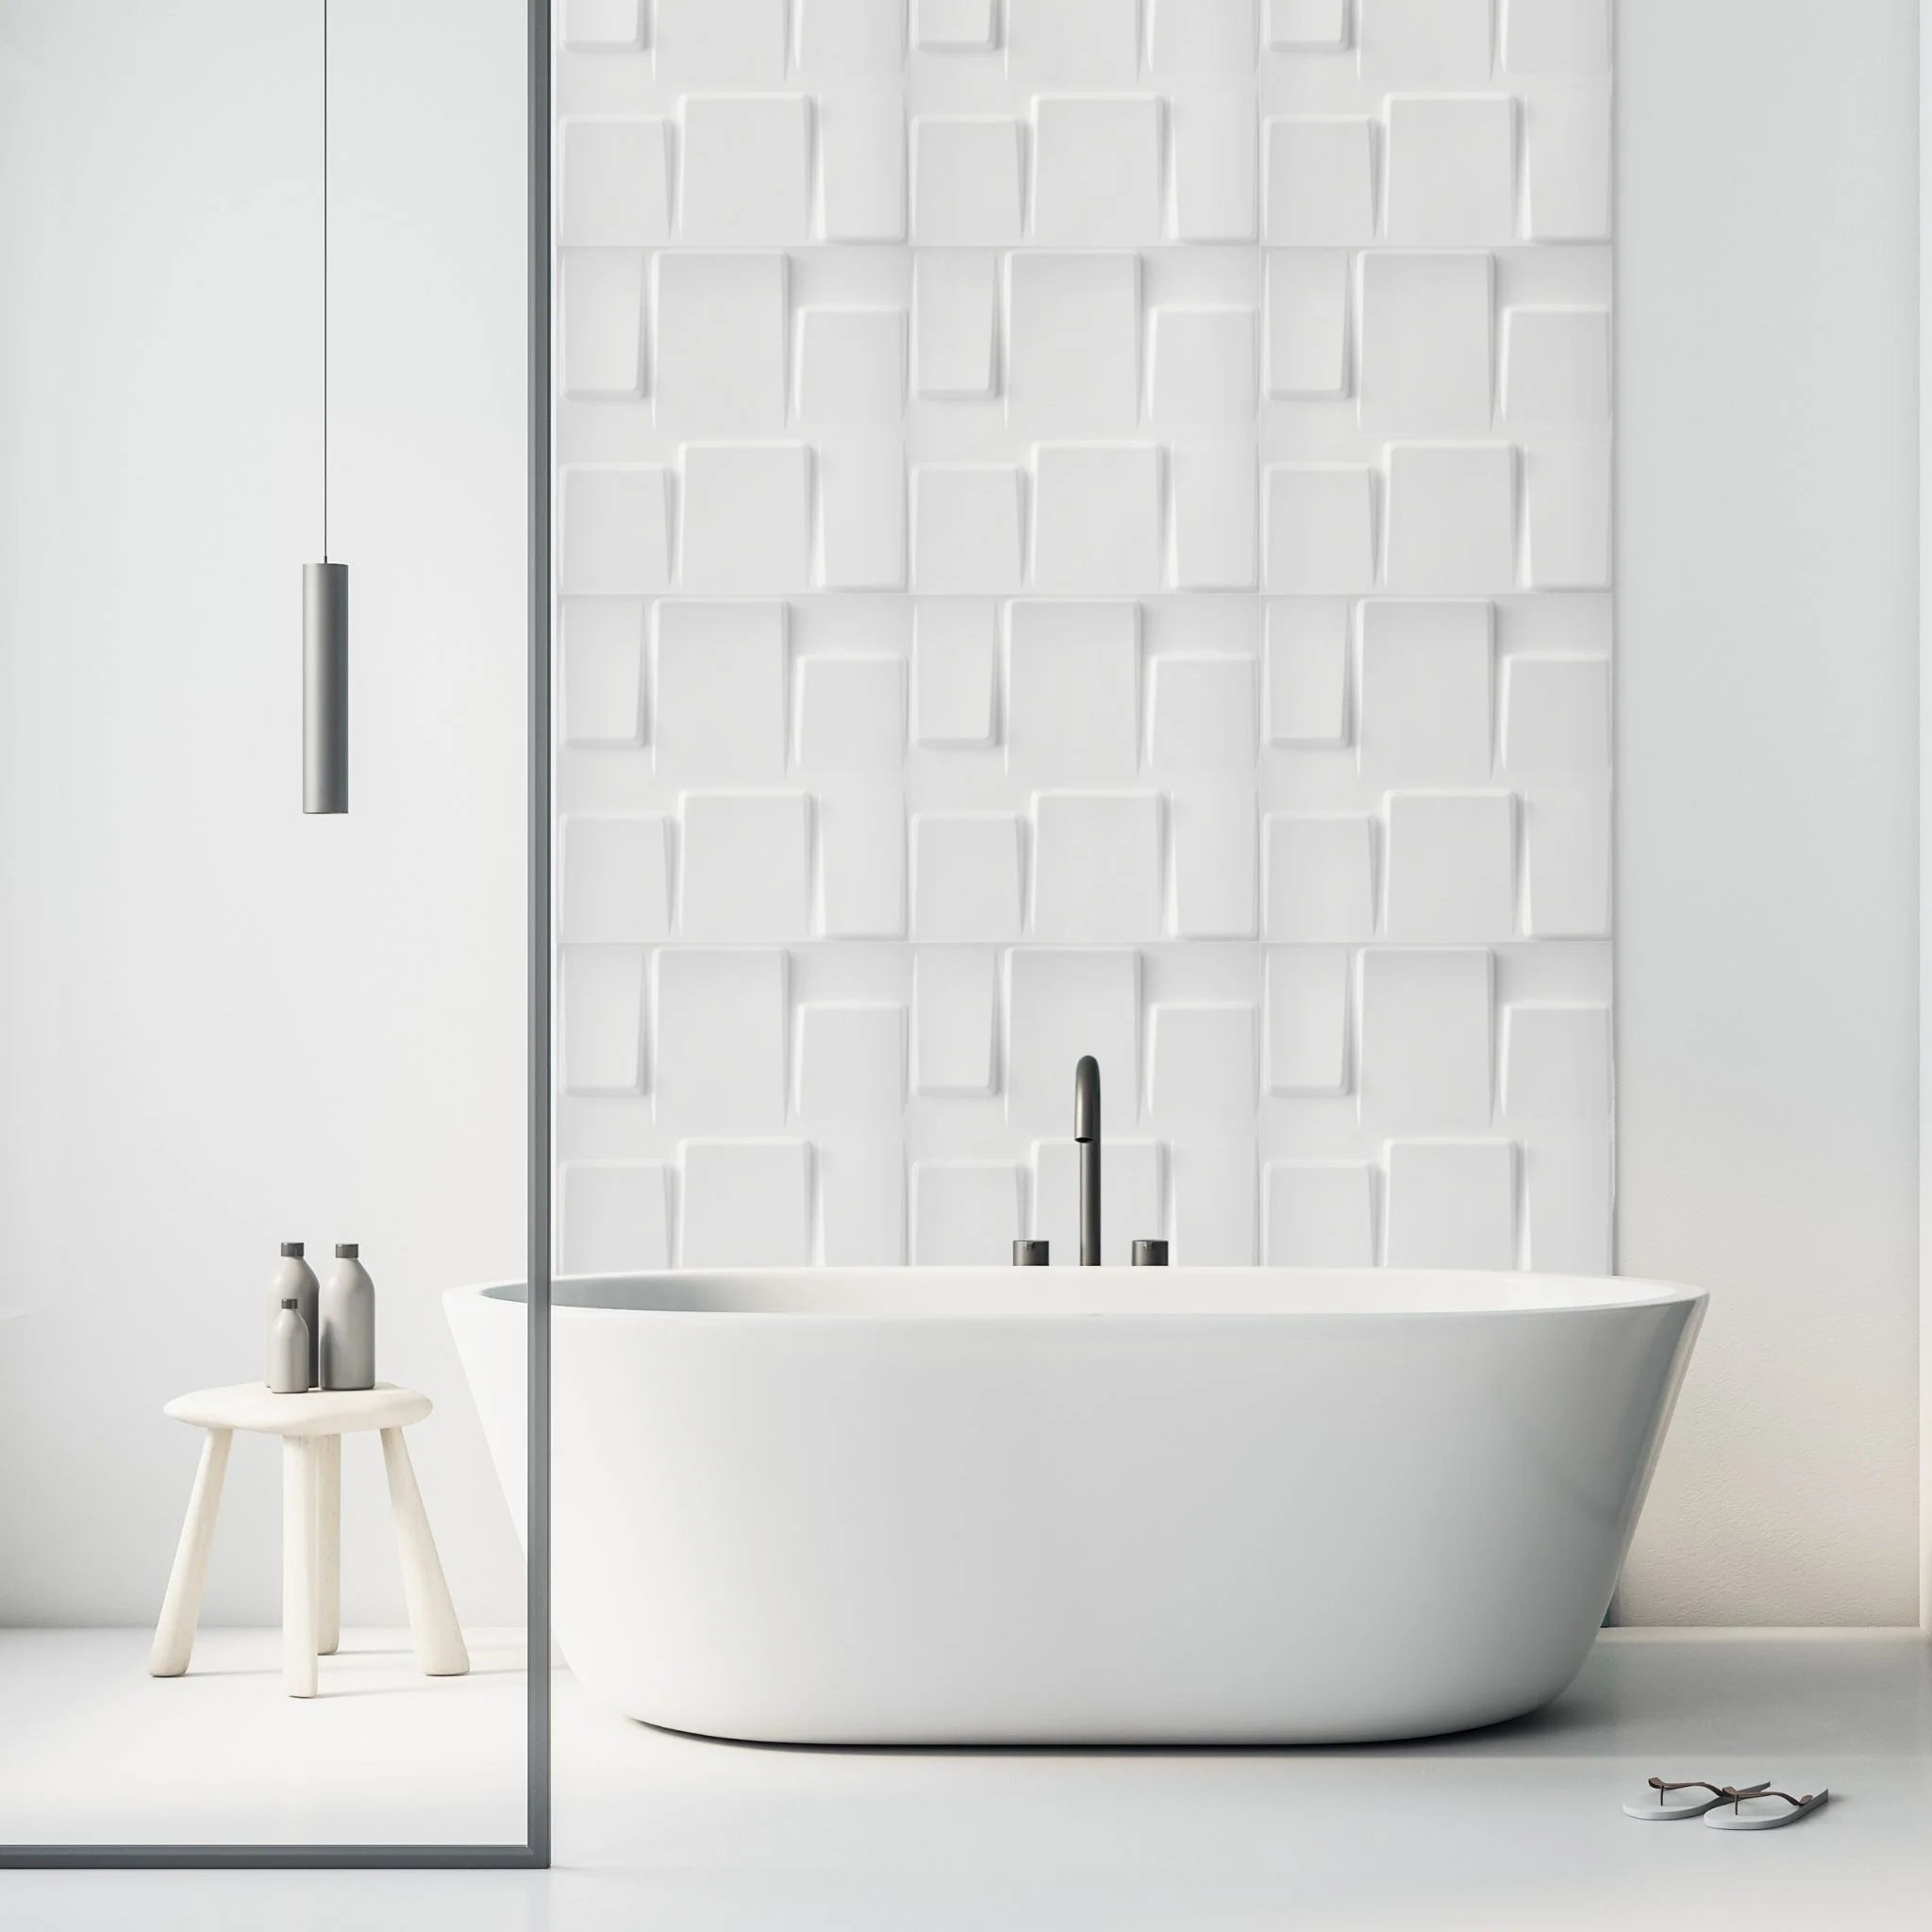 White PVC wall panel with geometric pattern in minimalist bathroom